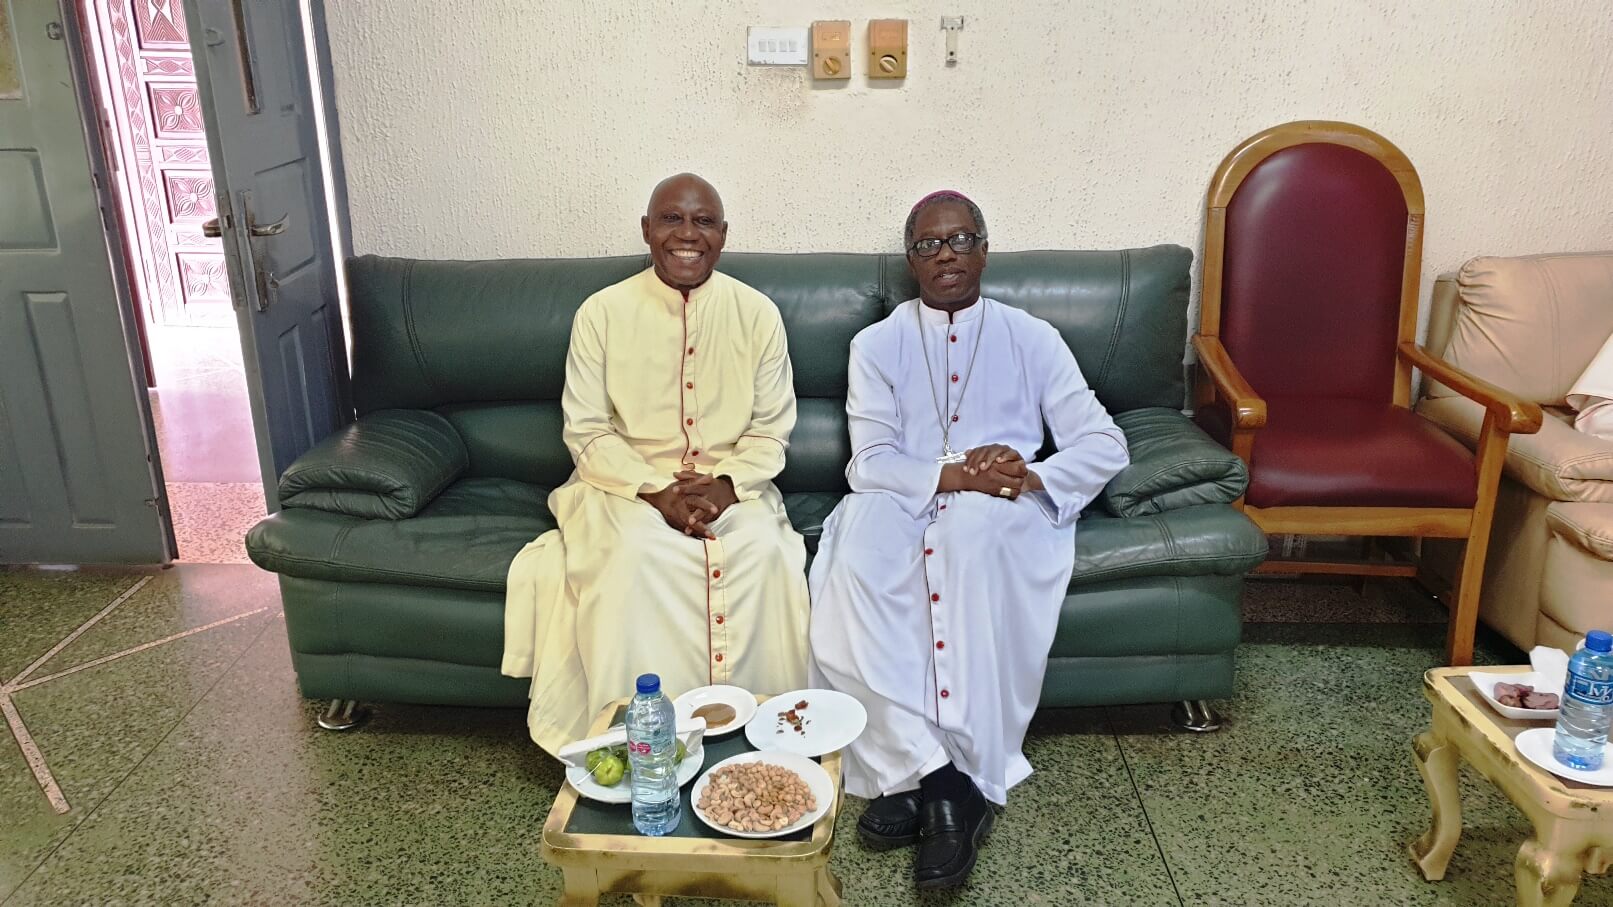 Archbishop Jude Thaddeus Okolo, Apostolic Nuncio to the Czech Republic, Receives Warm Welcome at the Catholic Diocese of Enugu